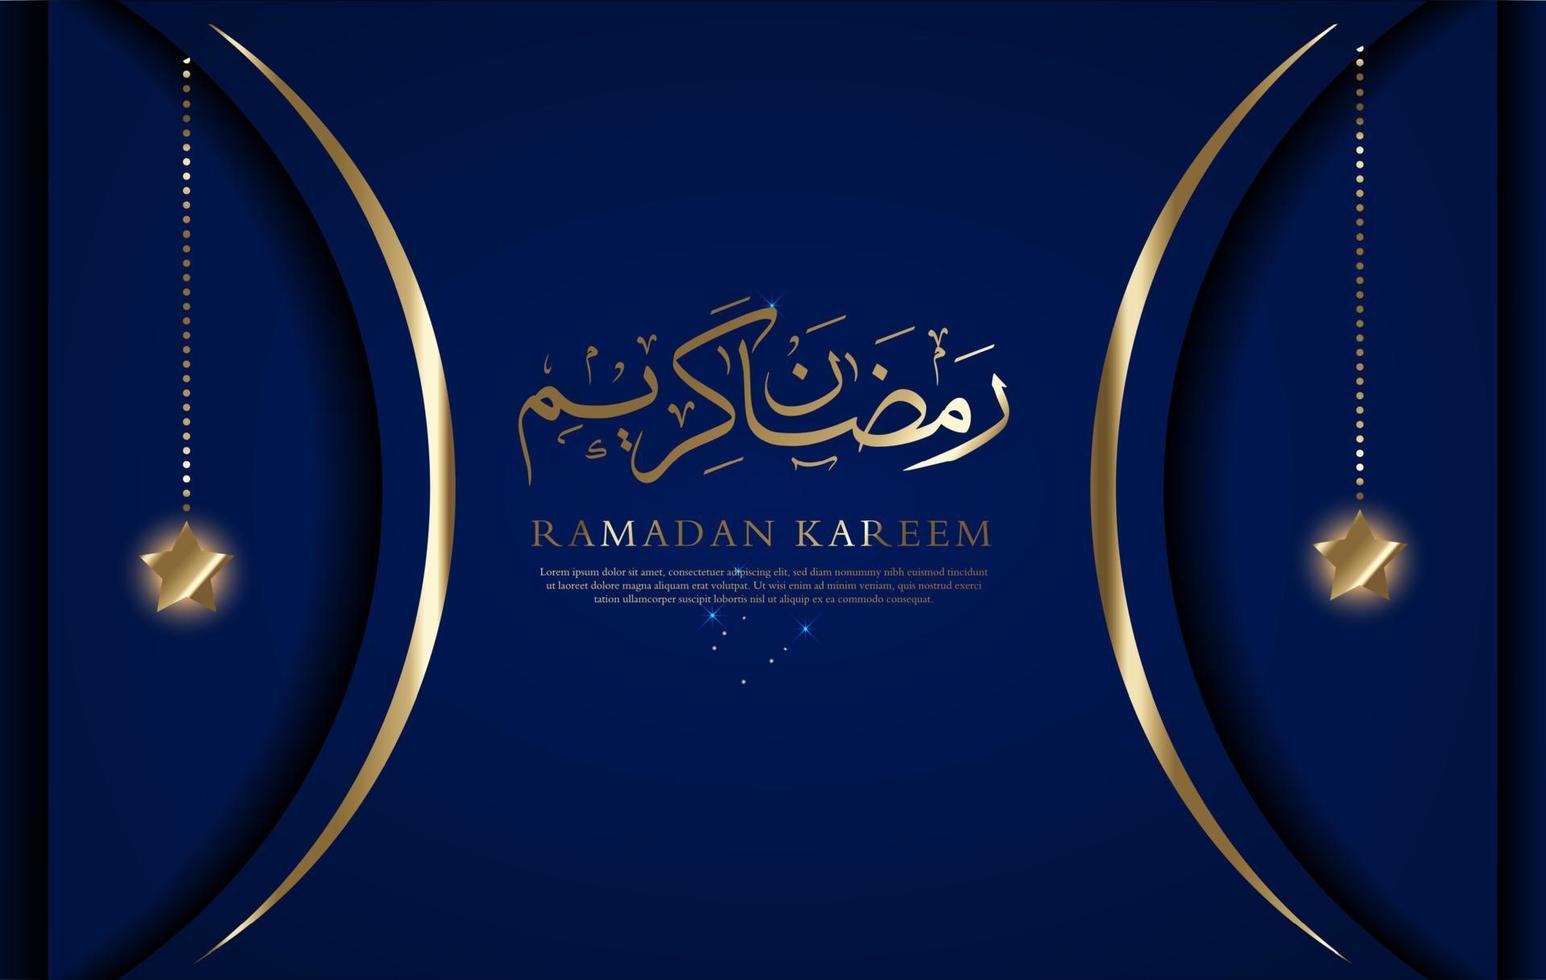 Ramadan kareem dans luxe style avec arabe calligraphie vecteur